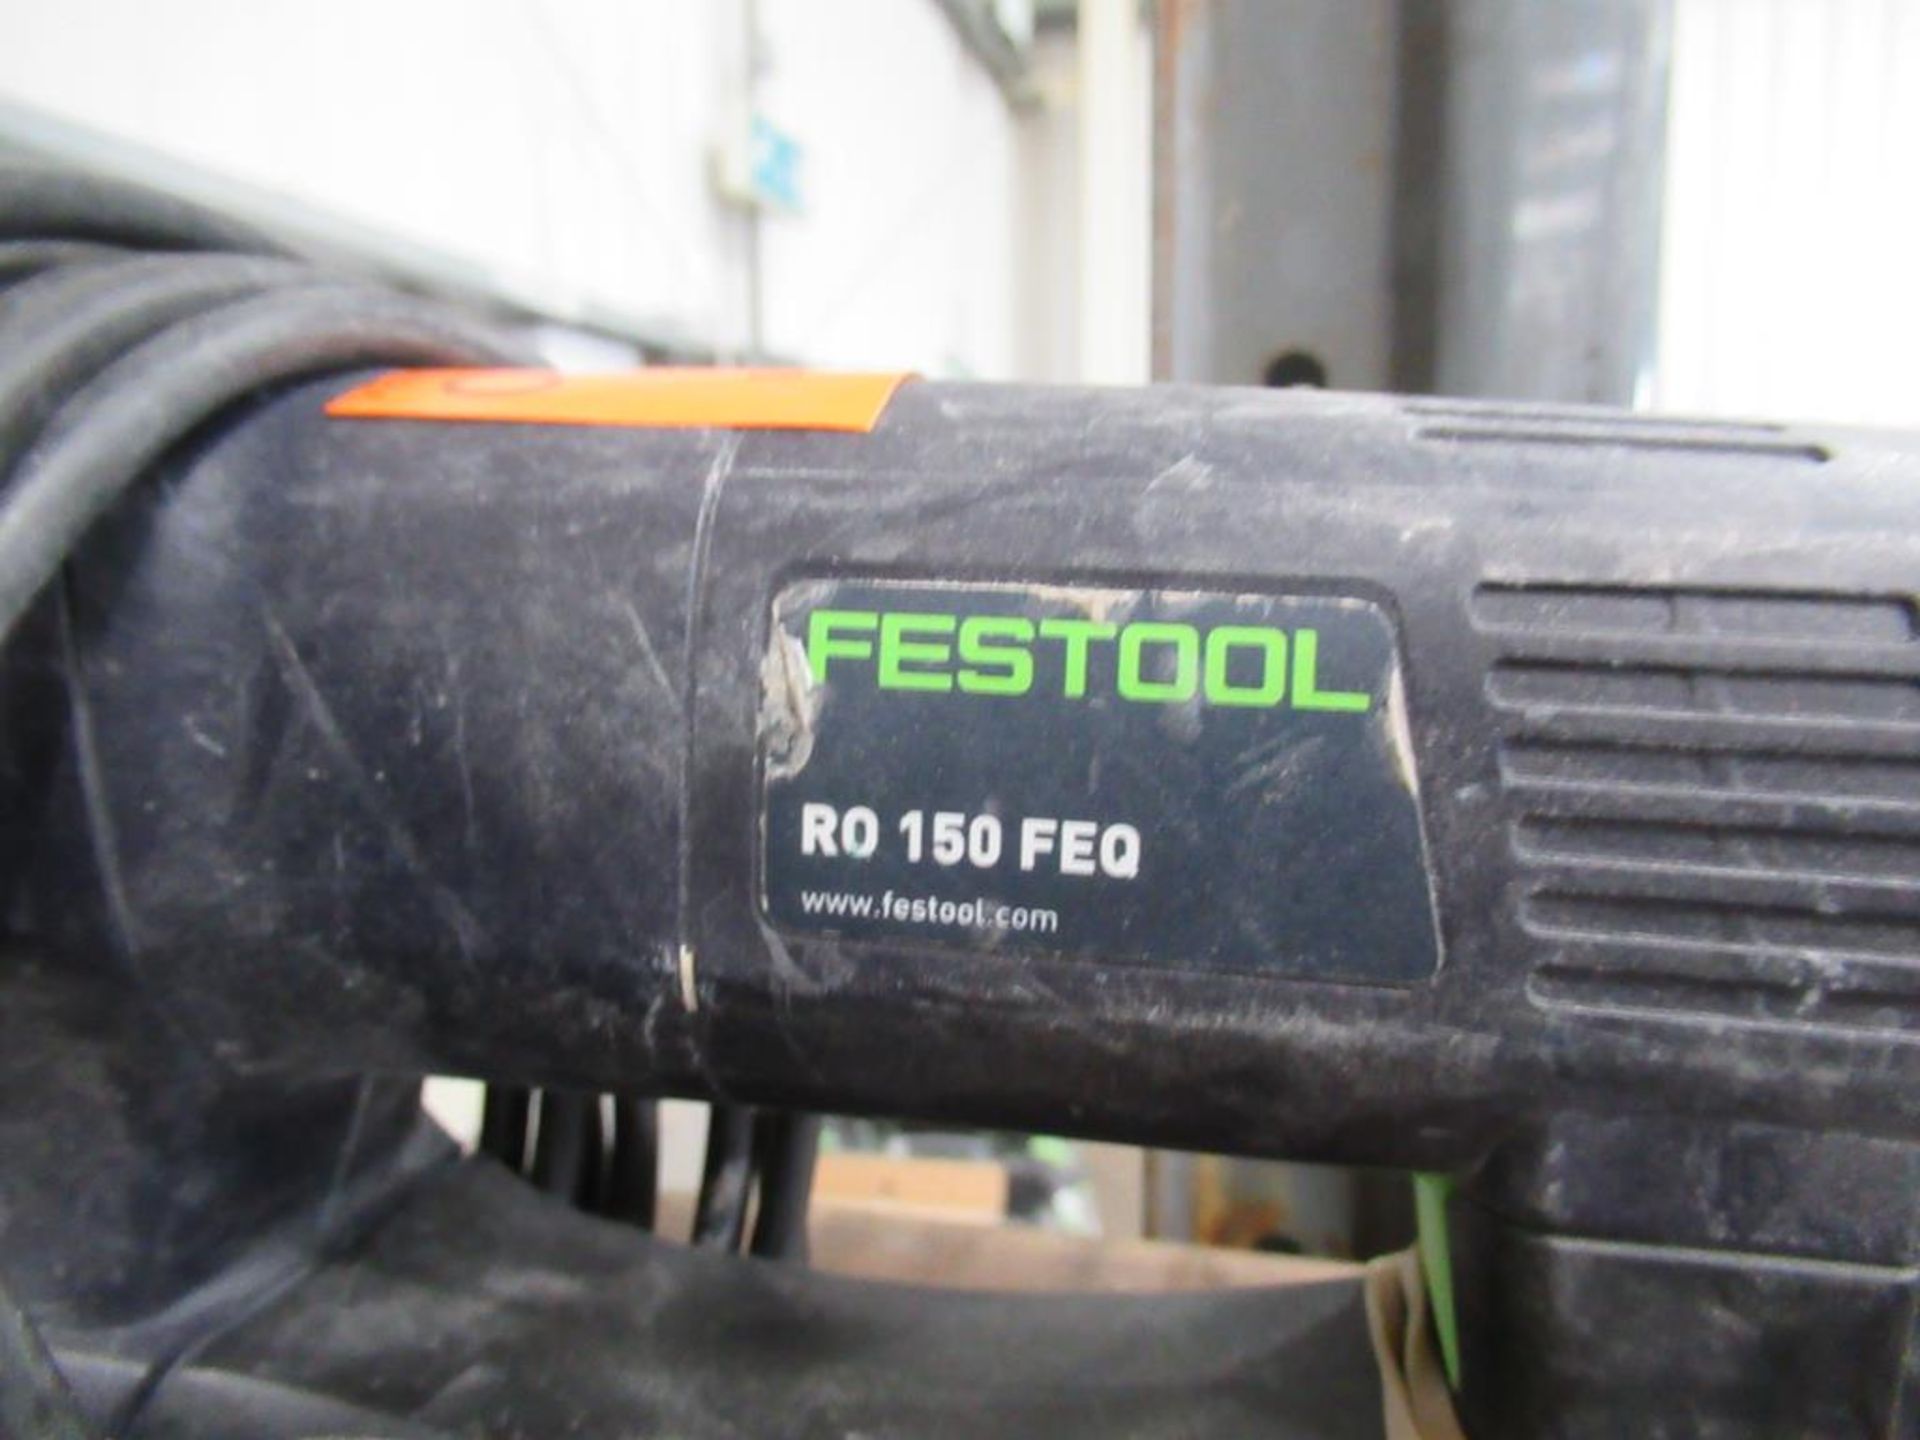 Festool RO 150 FEQ Orbital Sander/ Polisher - Image 2 of 2